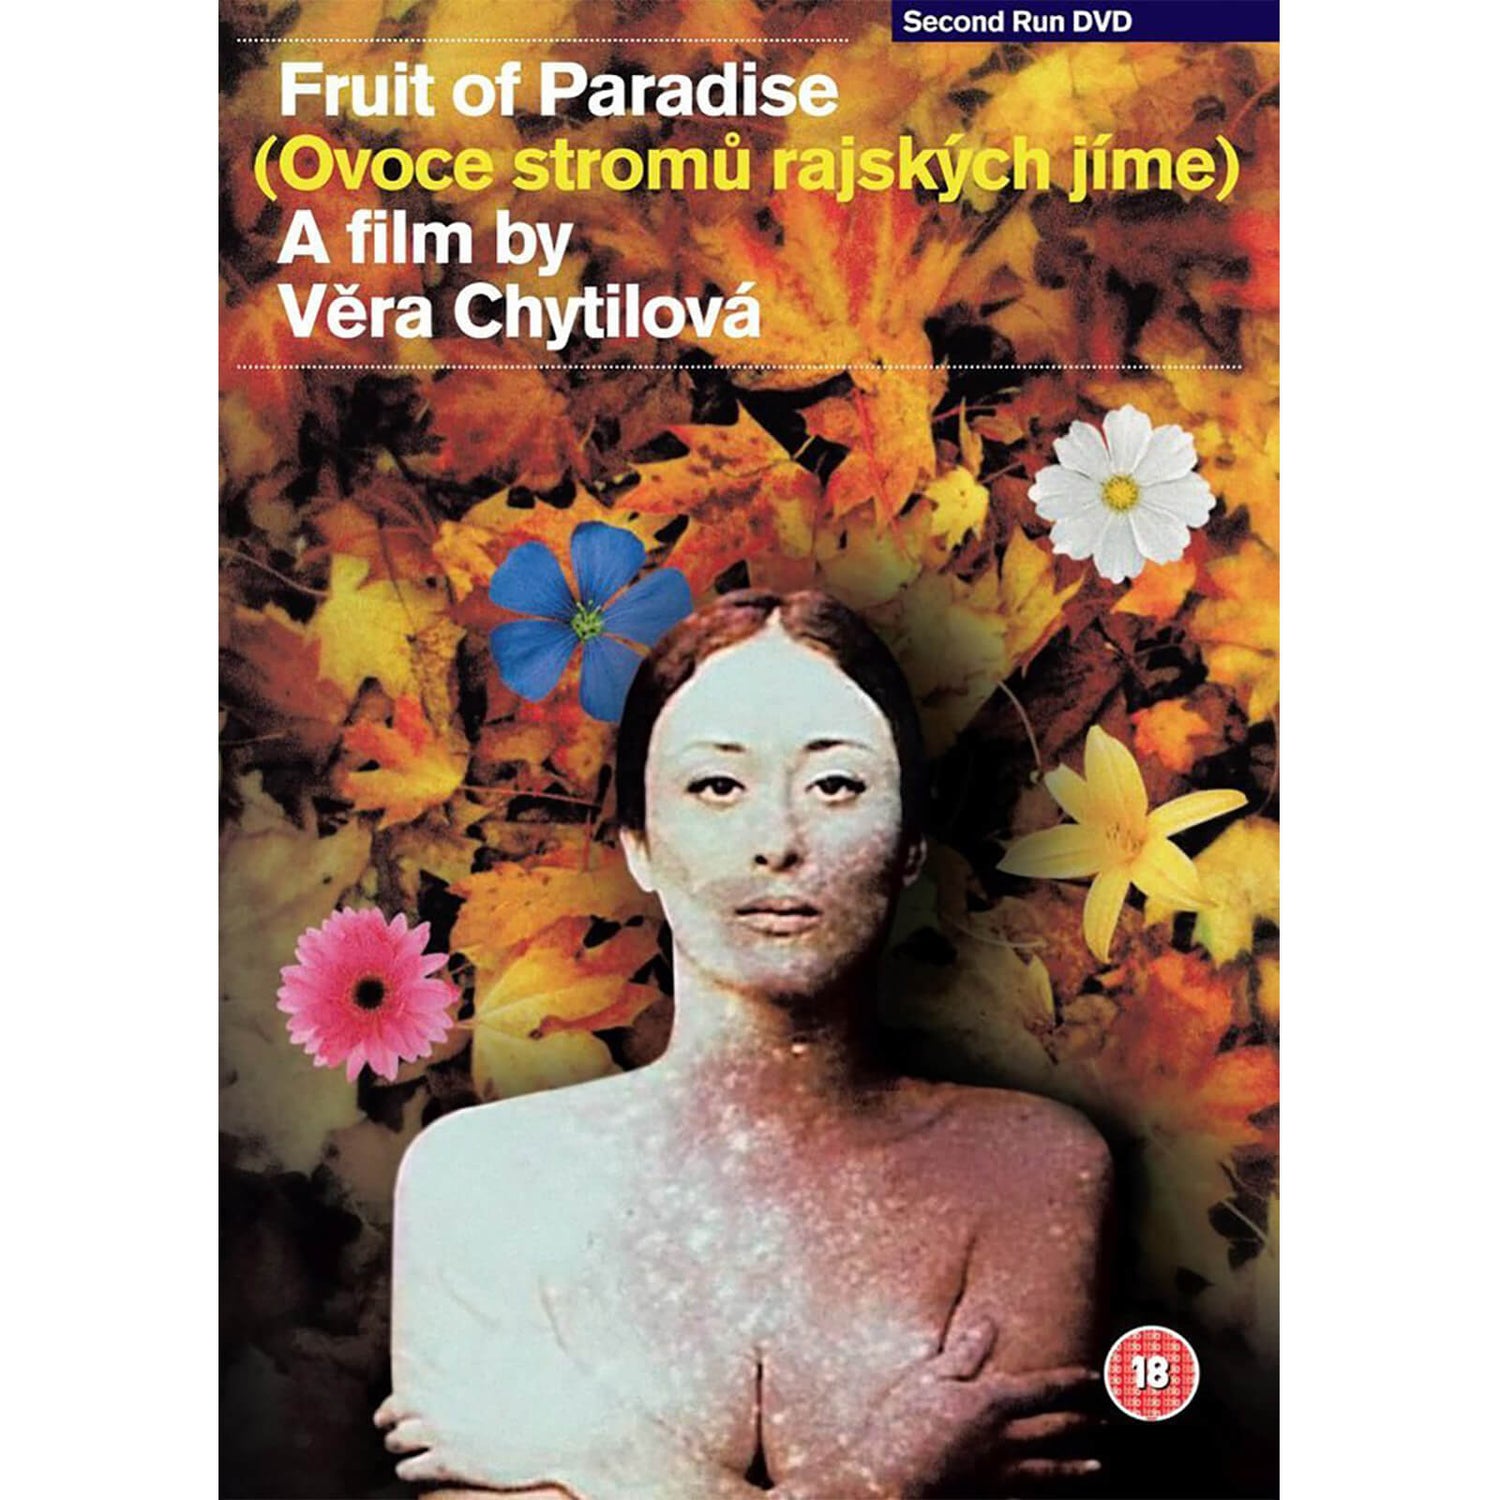 Fruit of Paradise DVD